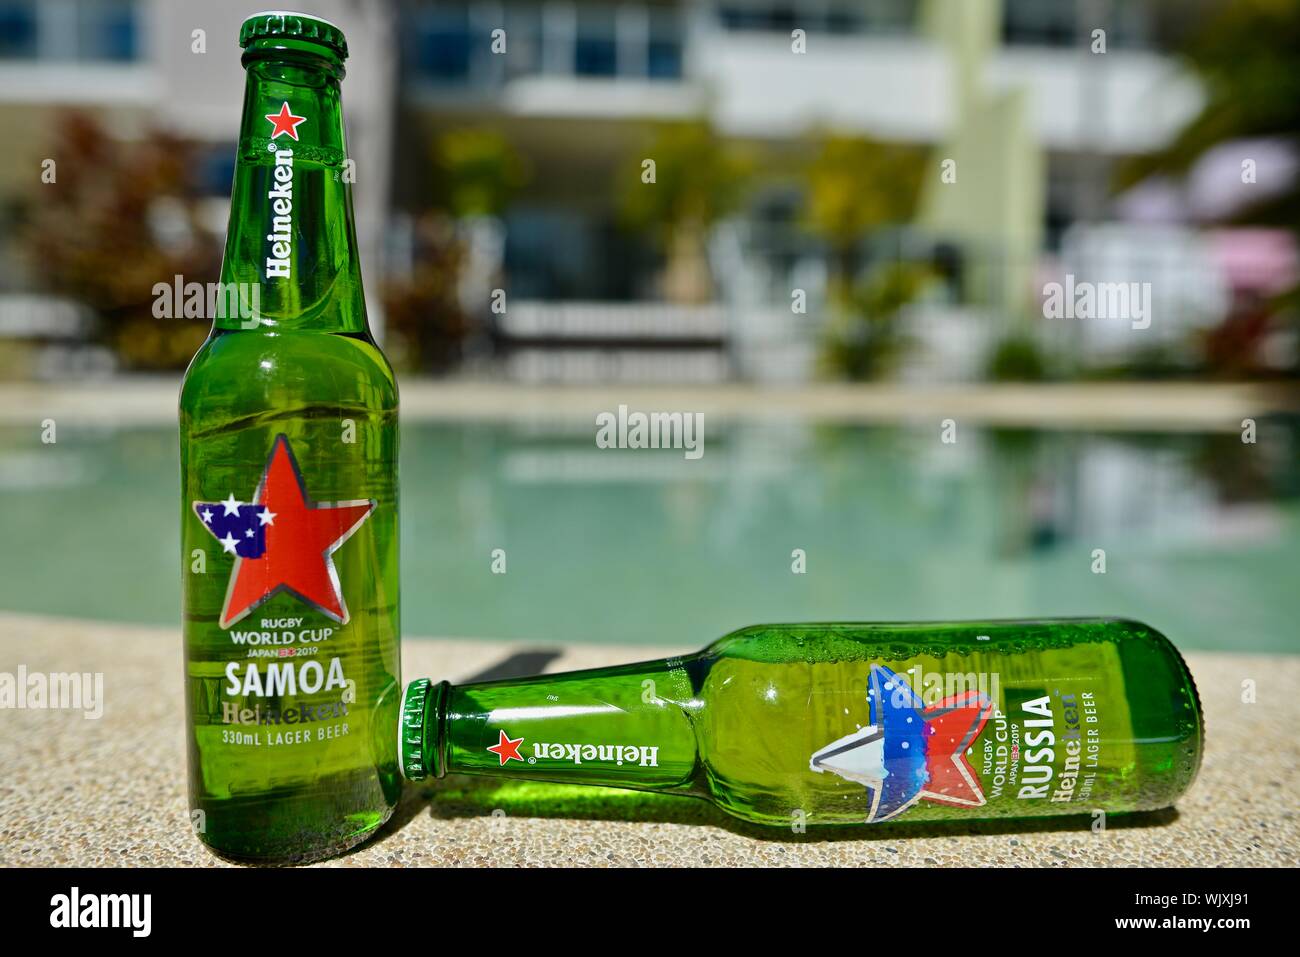 Russia versus Samoa, Samoa wins, Heineken 2019 Japan Rugby world cup beer bottles Stock Photo